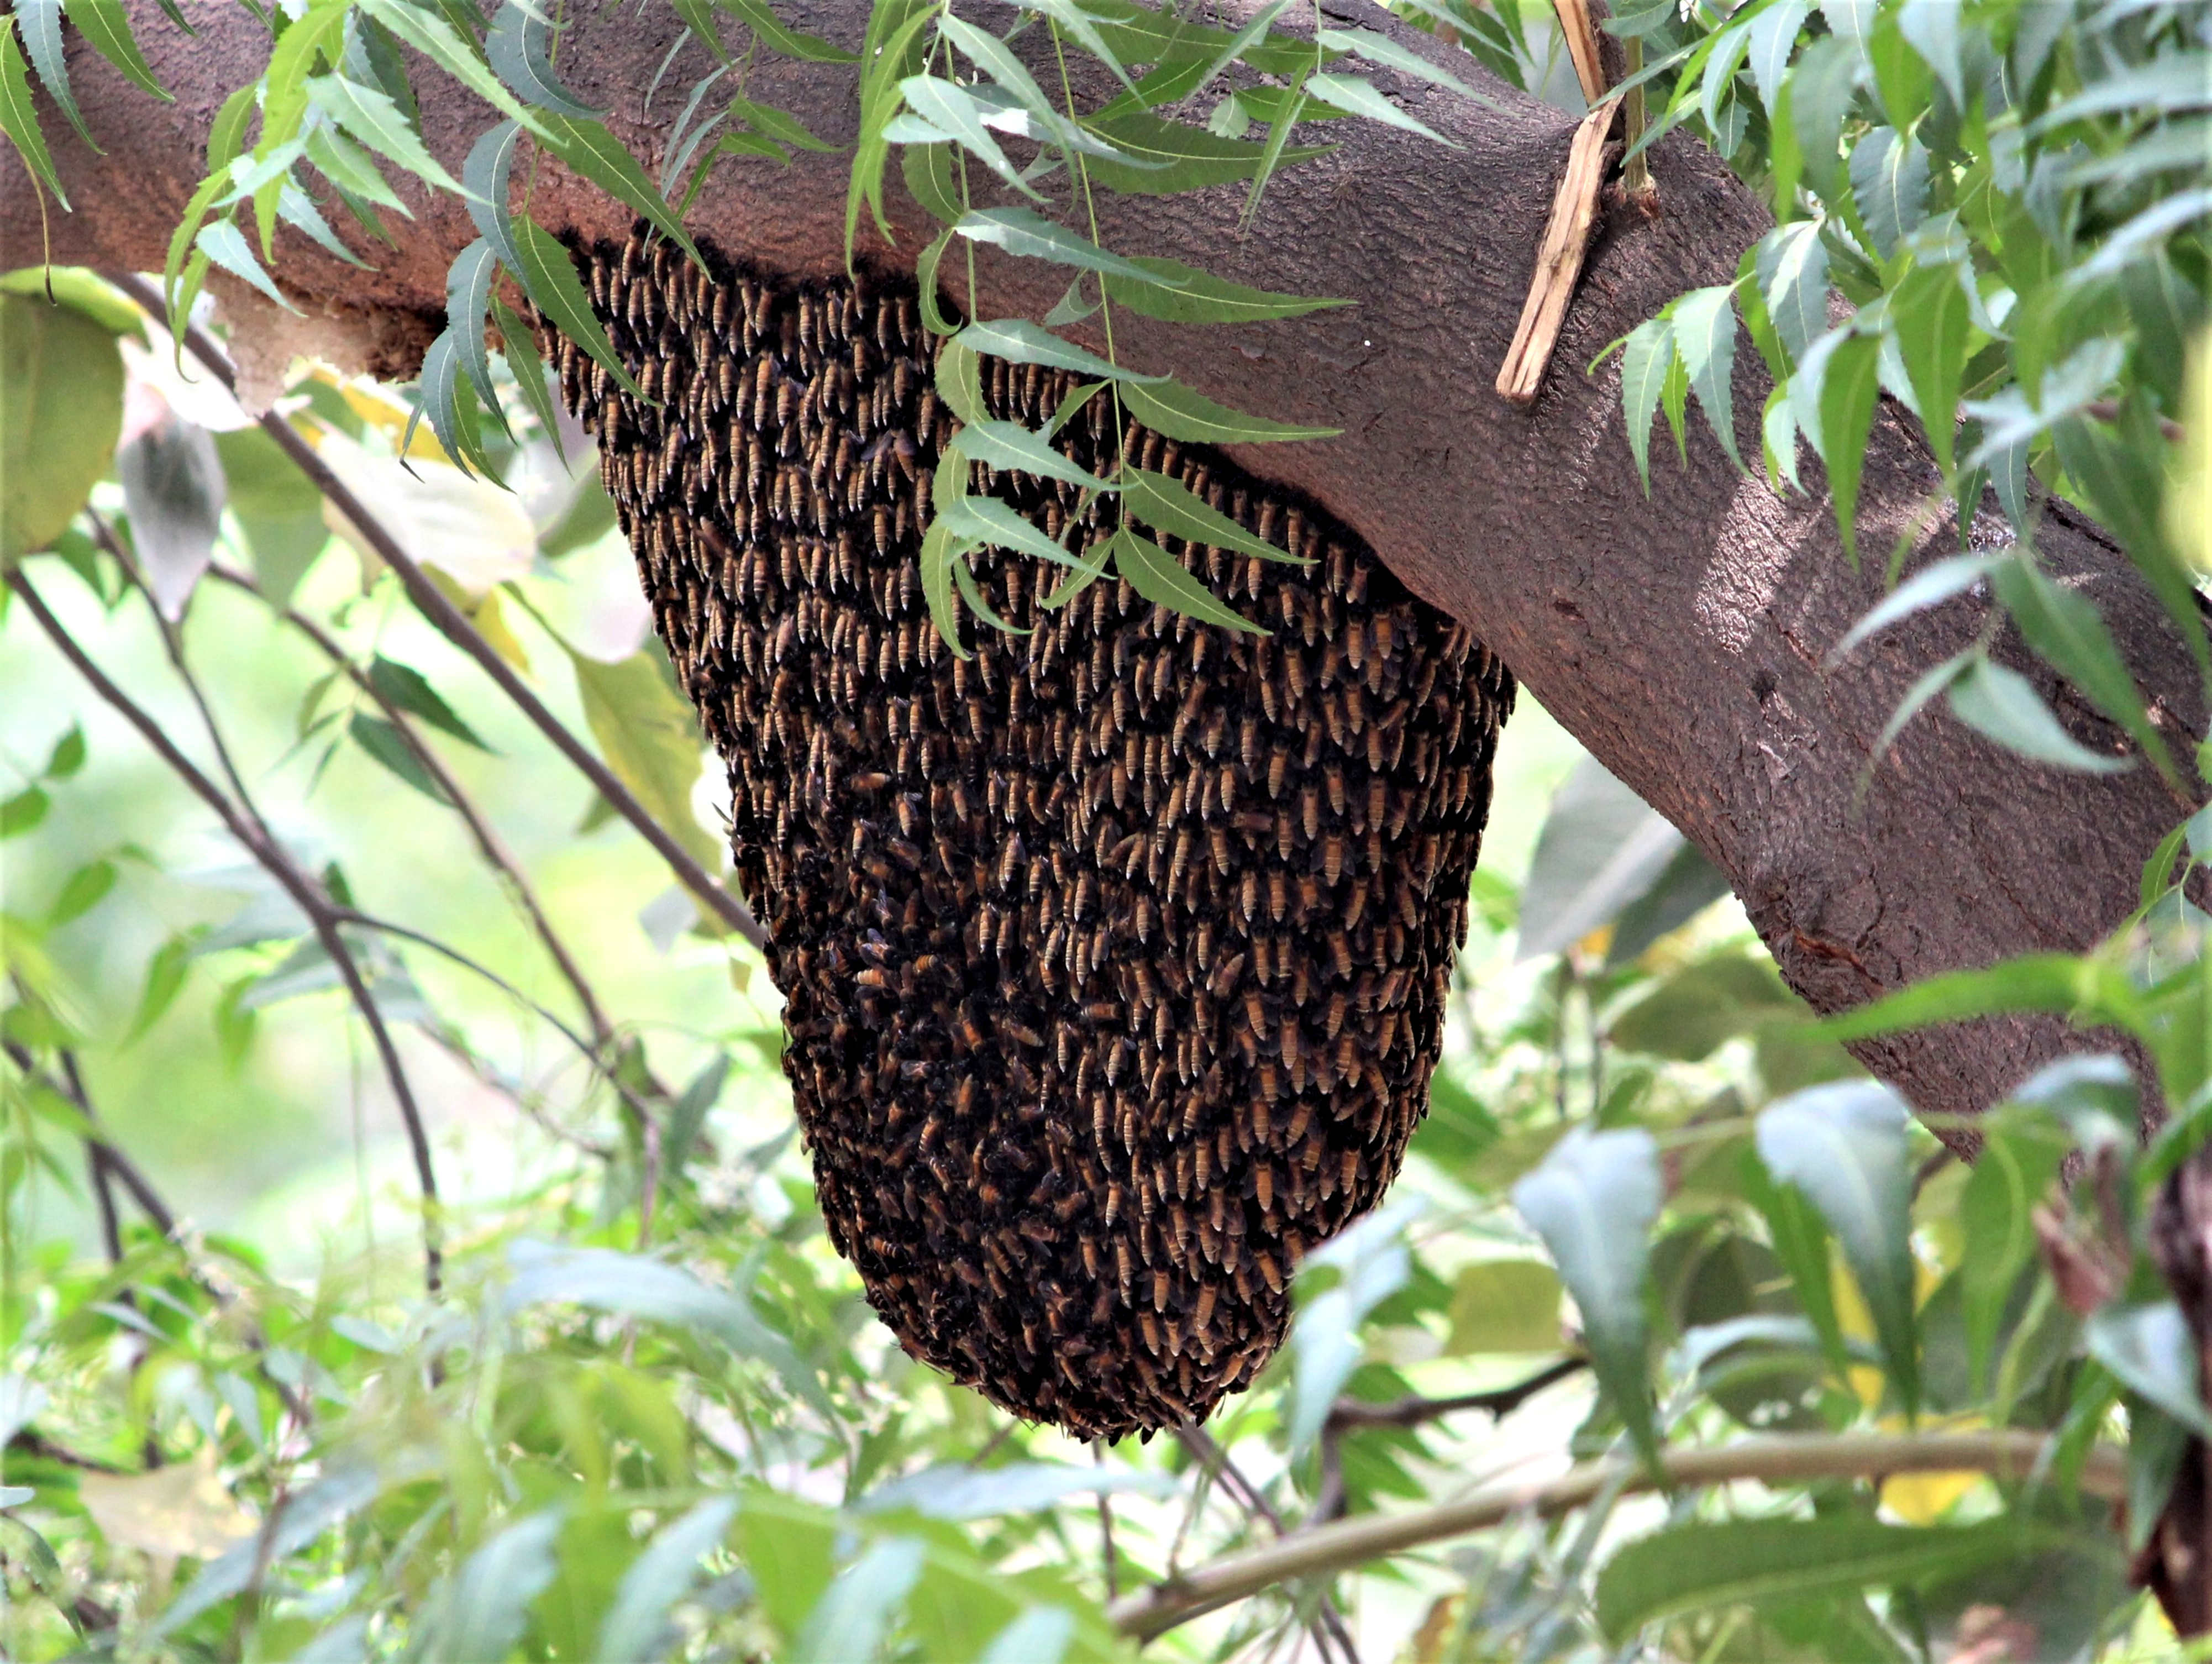 The Mechanics of Pellet-Carrying Honey Bees